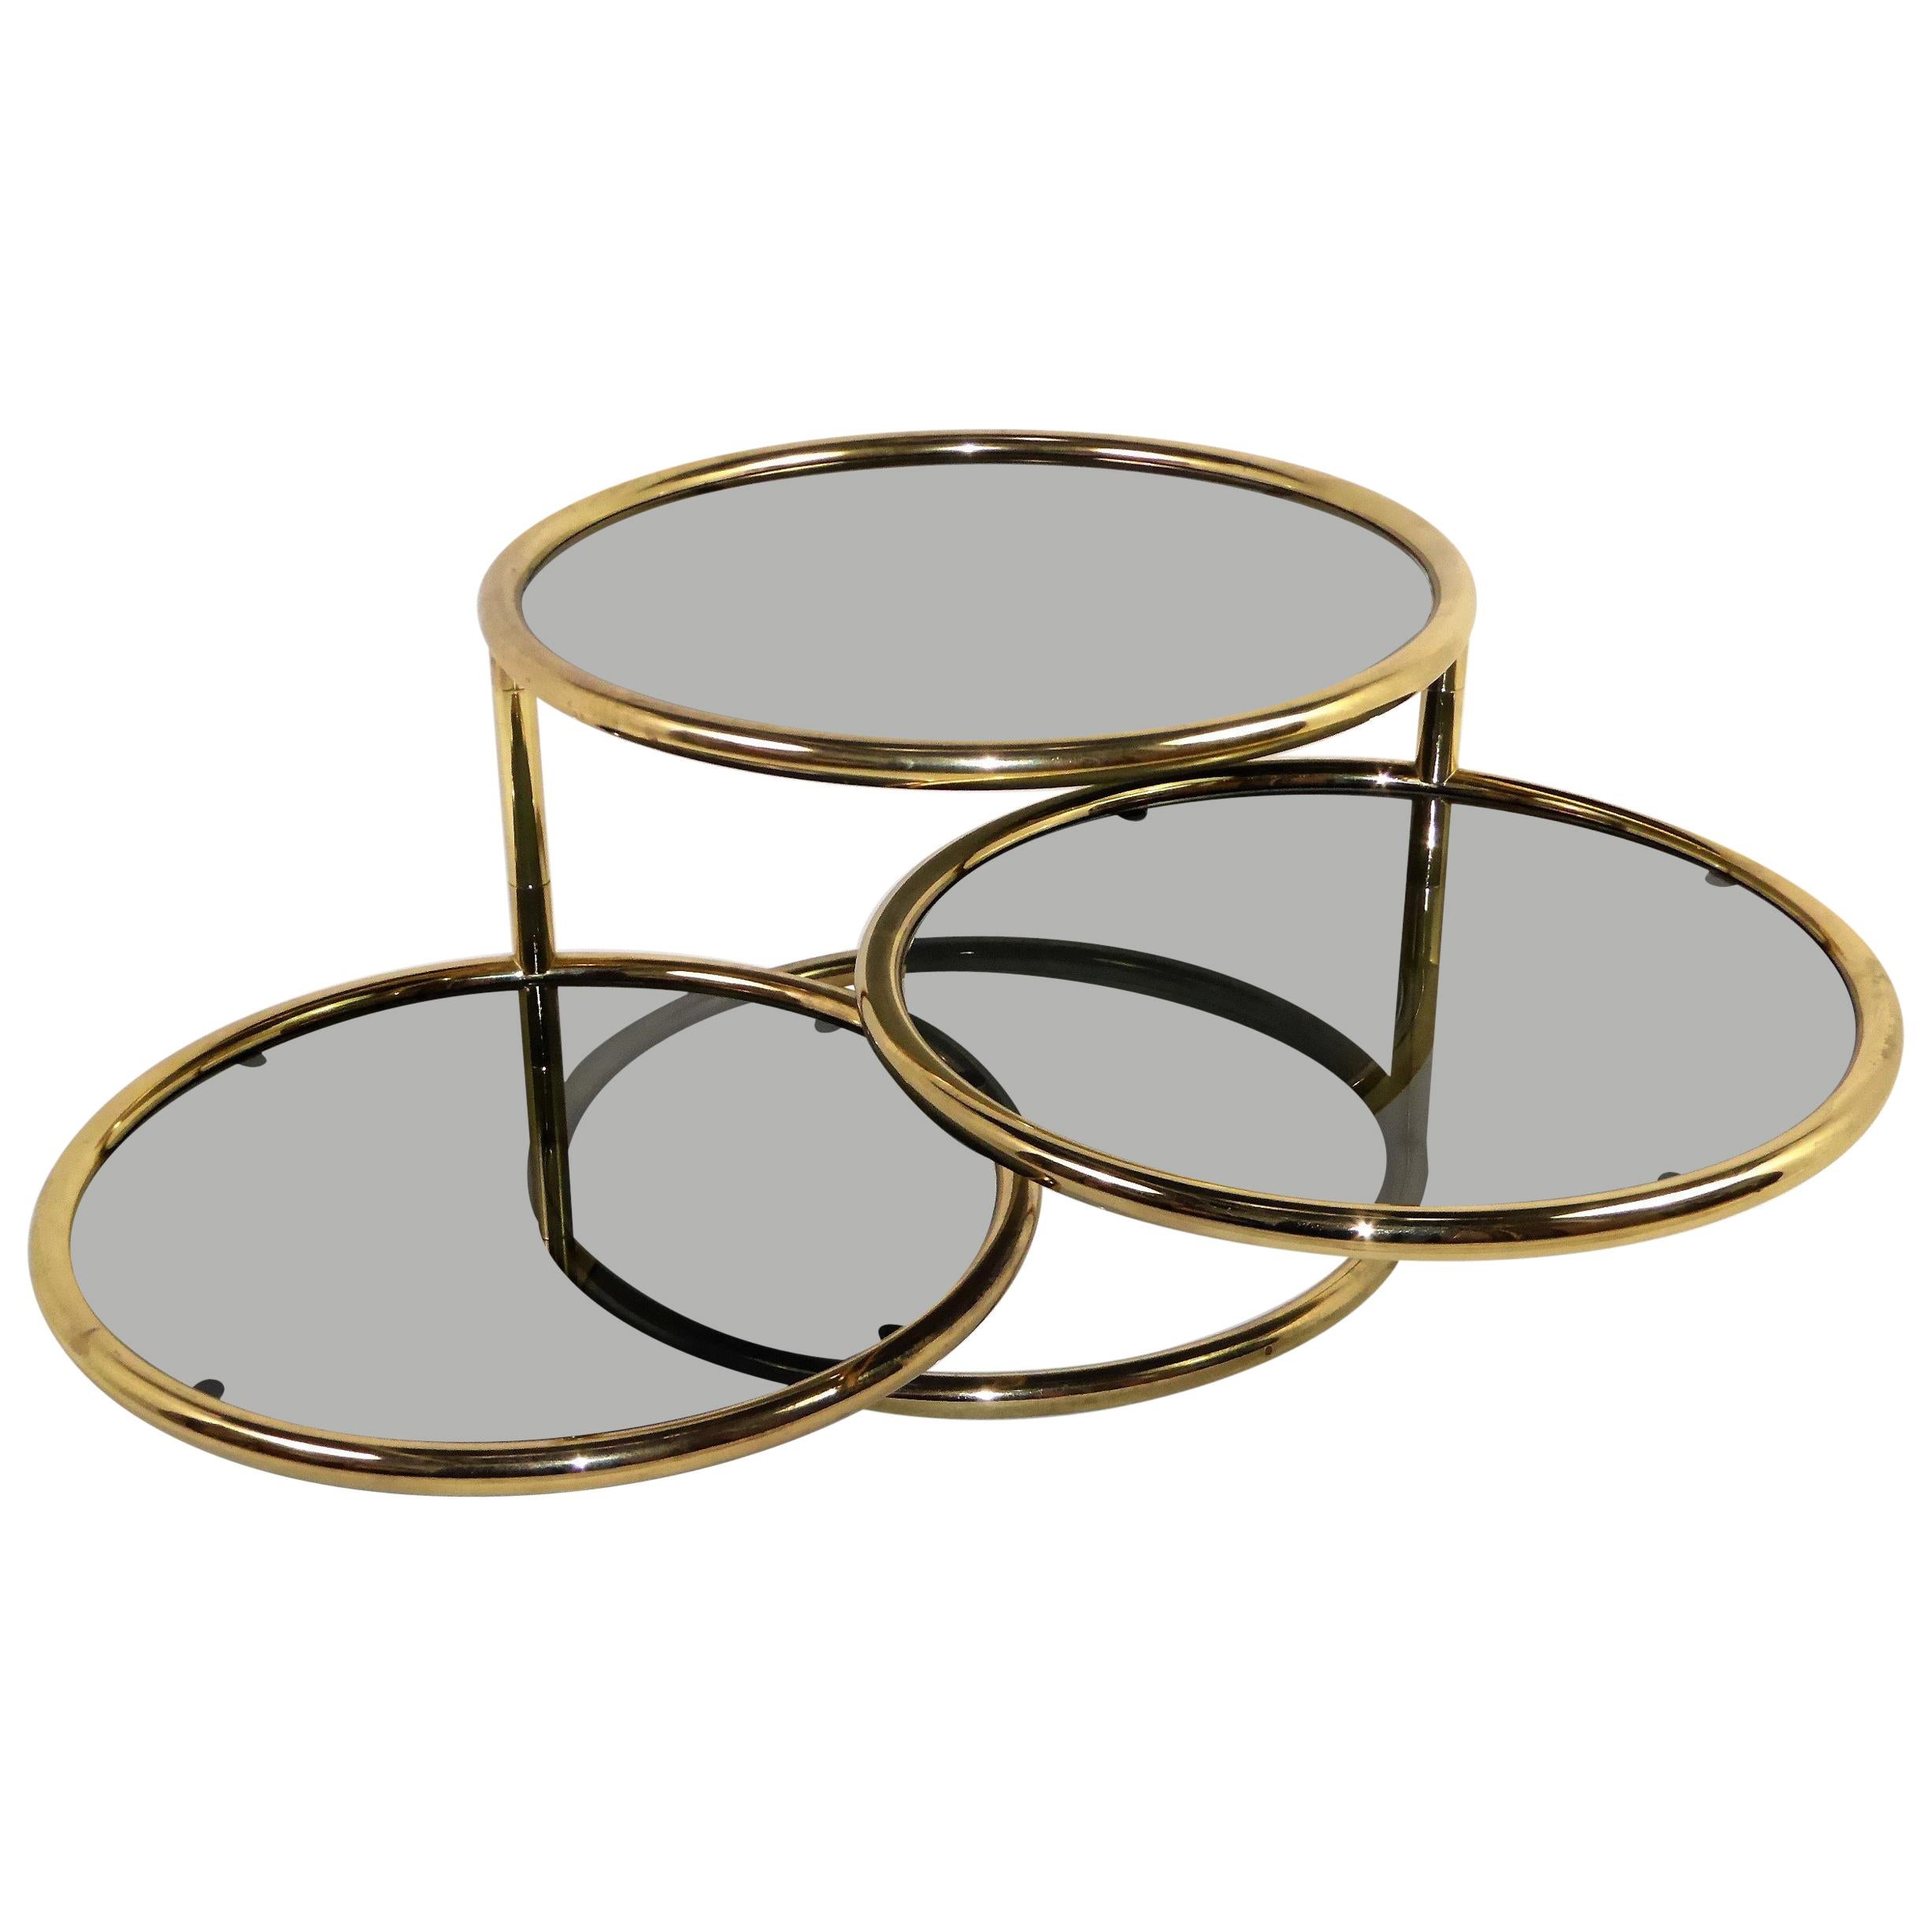 Sleek Milo Baughman Style Brass and Glass Swiveling Coffee Table